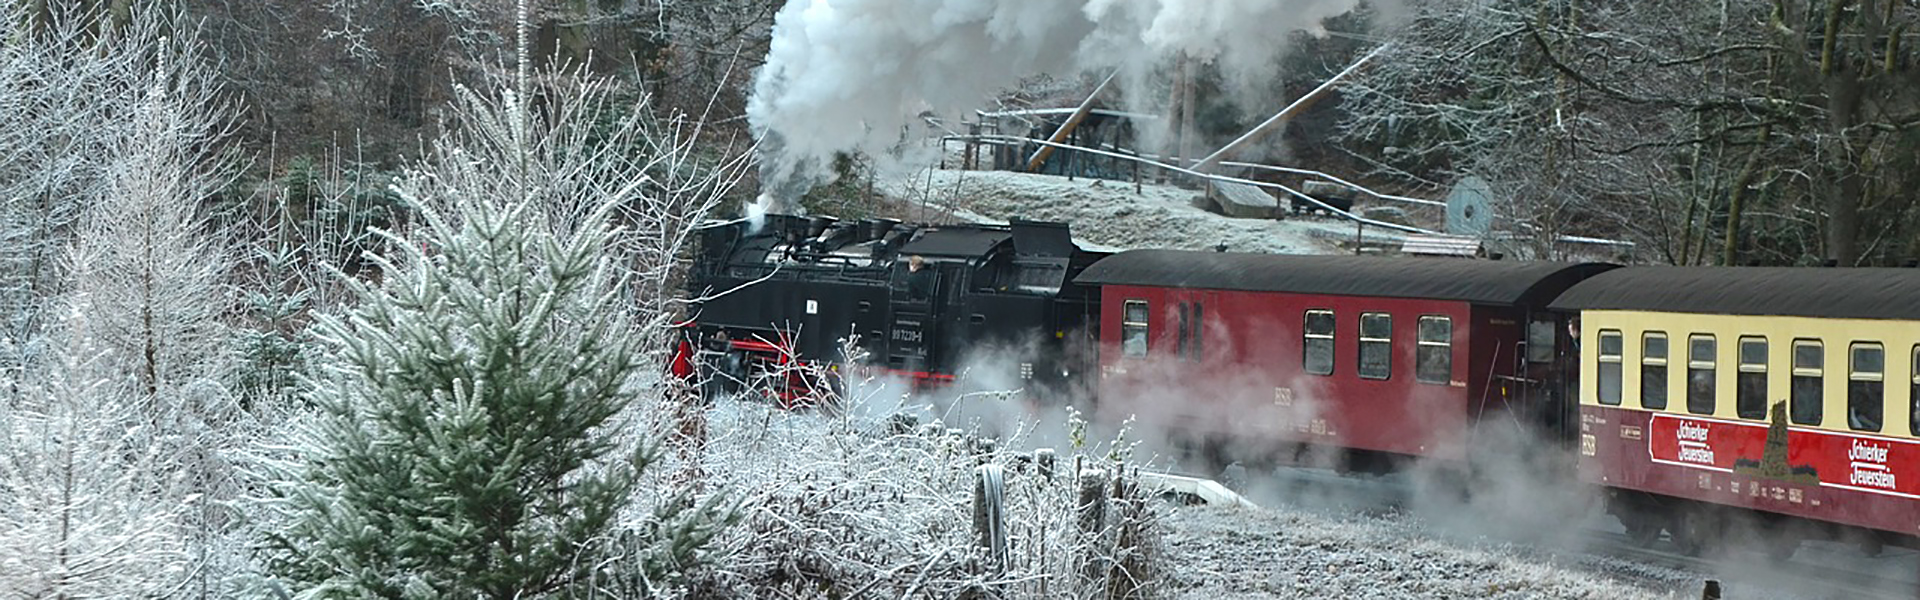 slide2-steam-locomotive-1921298_1280